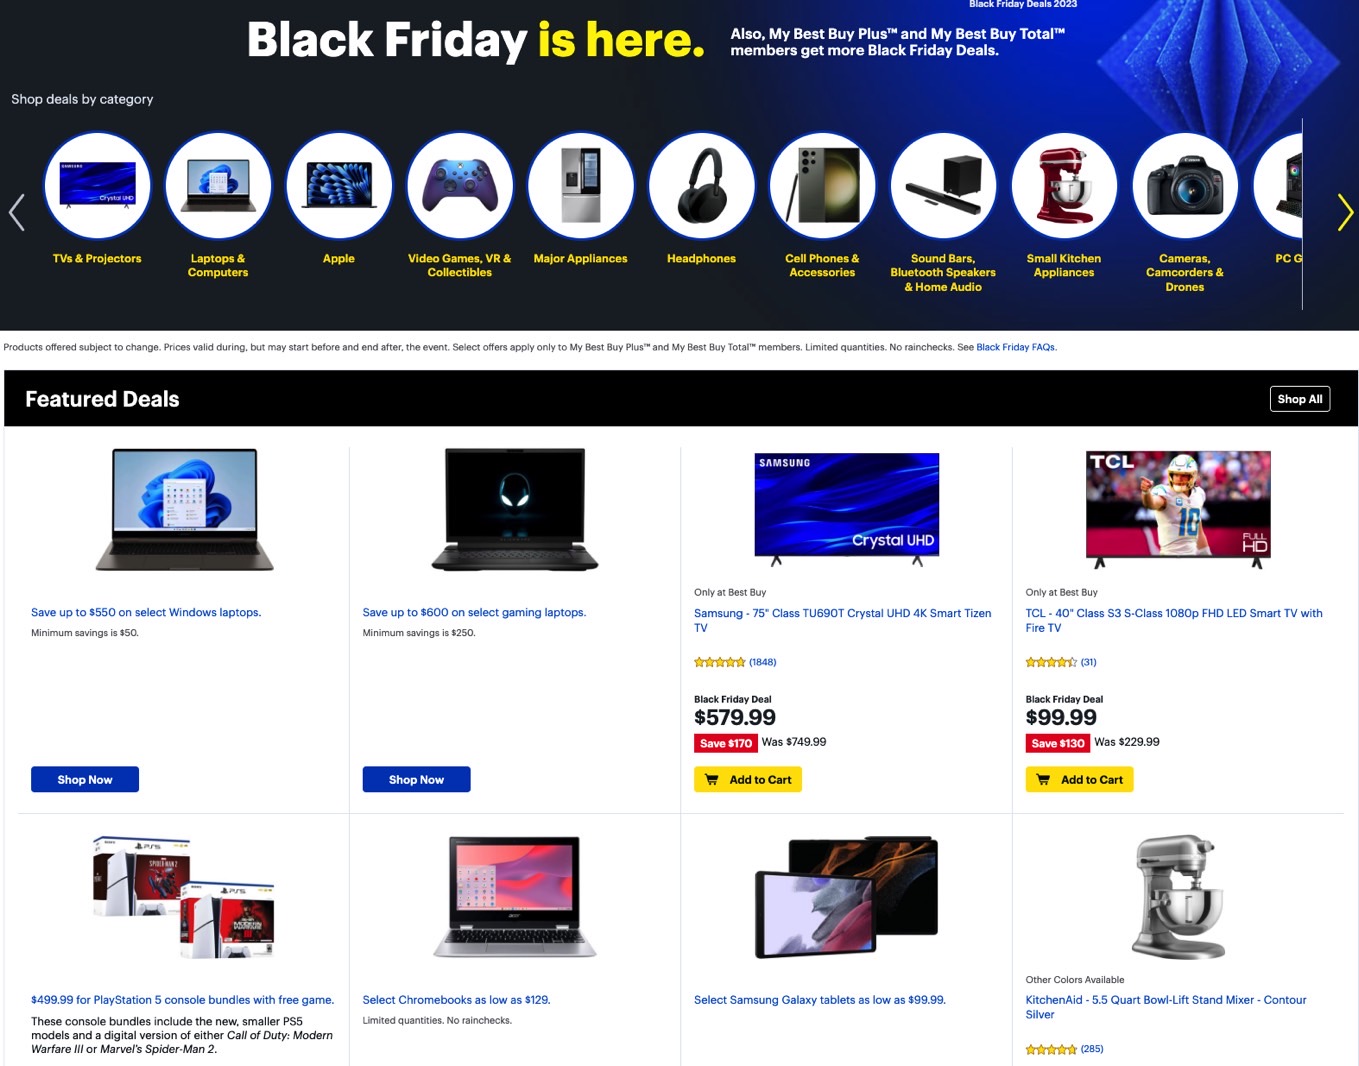 Best Buy Black Friday 2023 sale starts on November 17th.